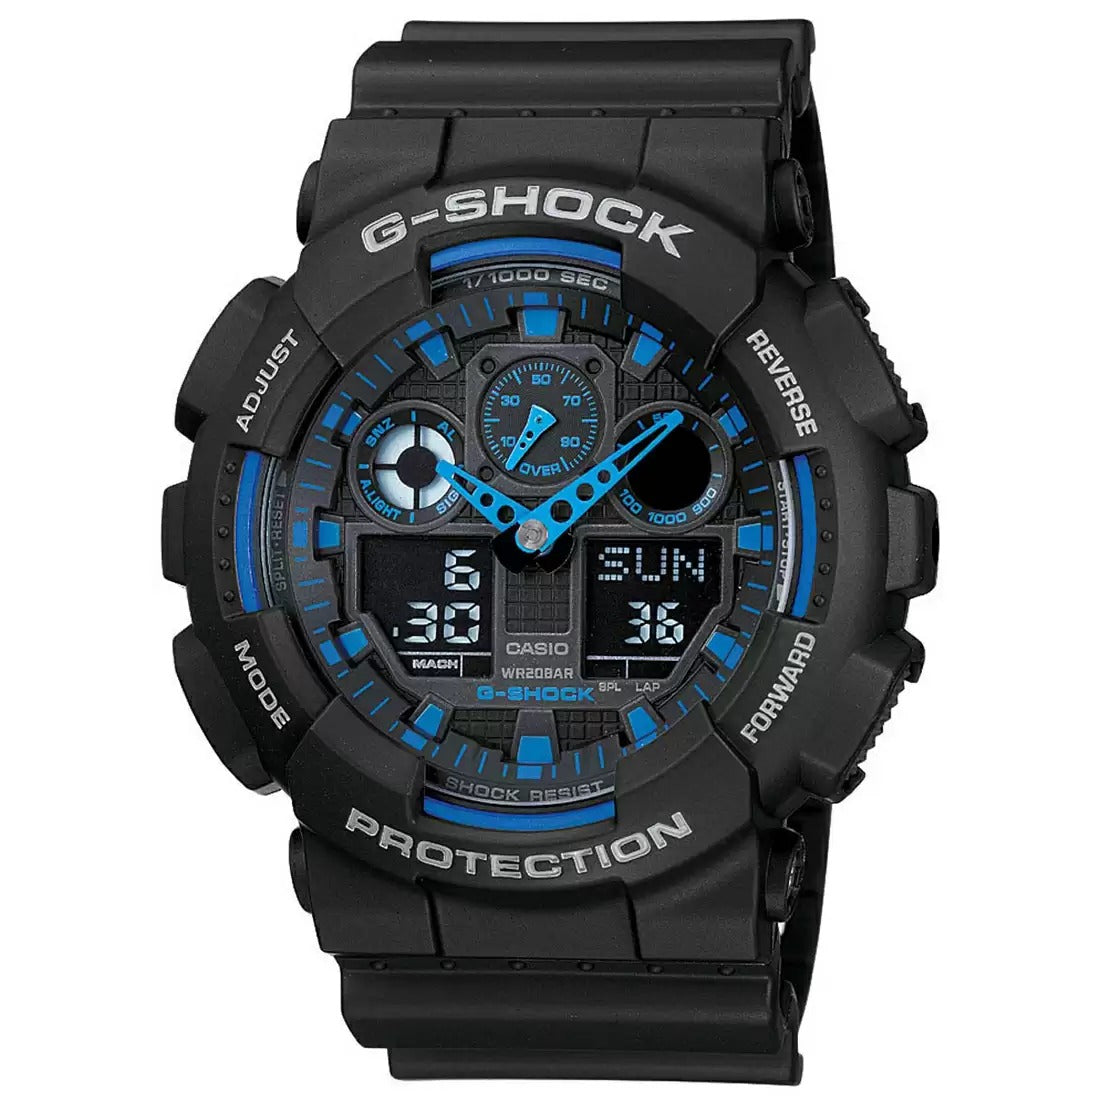 Casio G-Shock Black Analog-Digital Men's Watch G271 GA-100-1A2DR